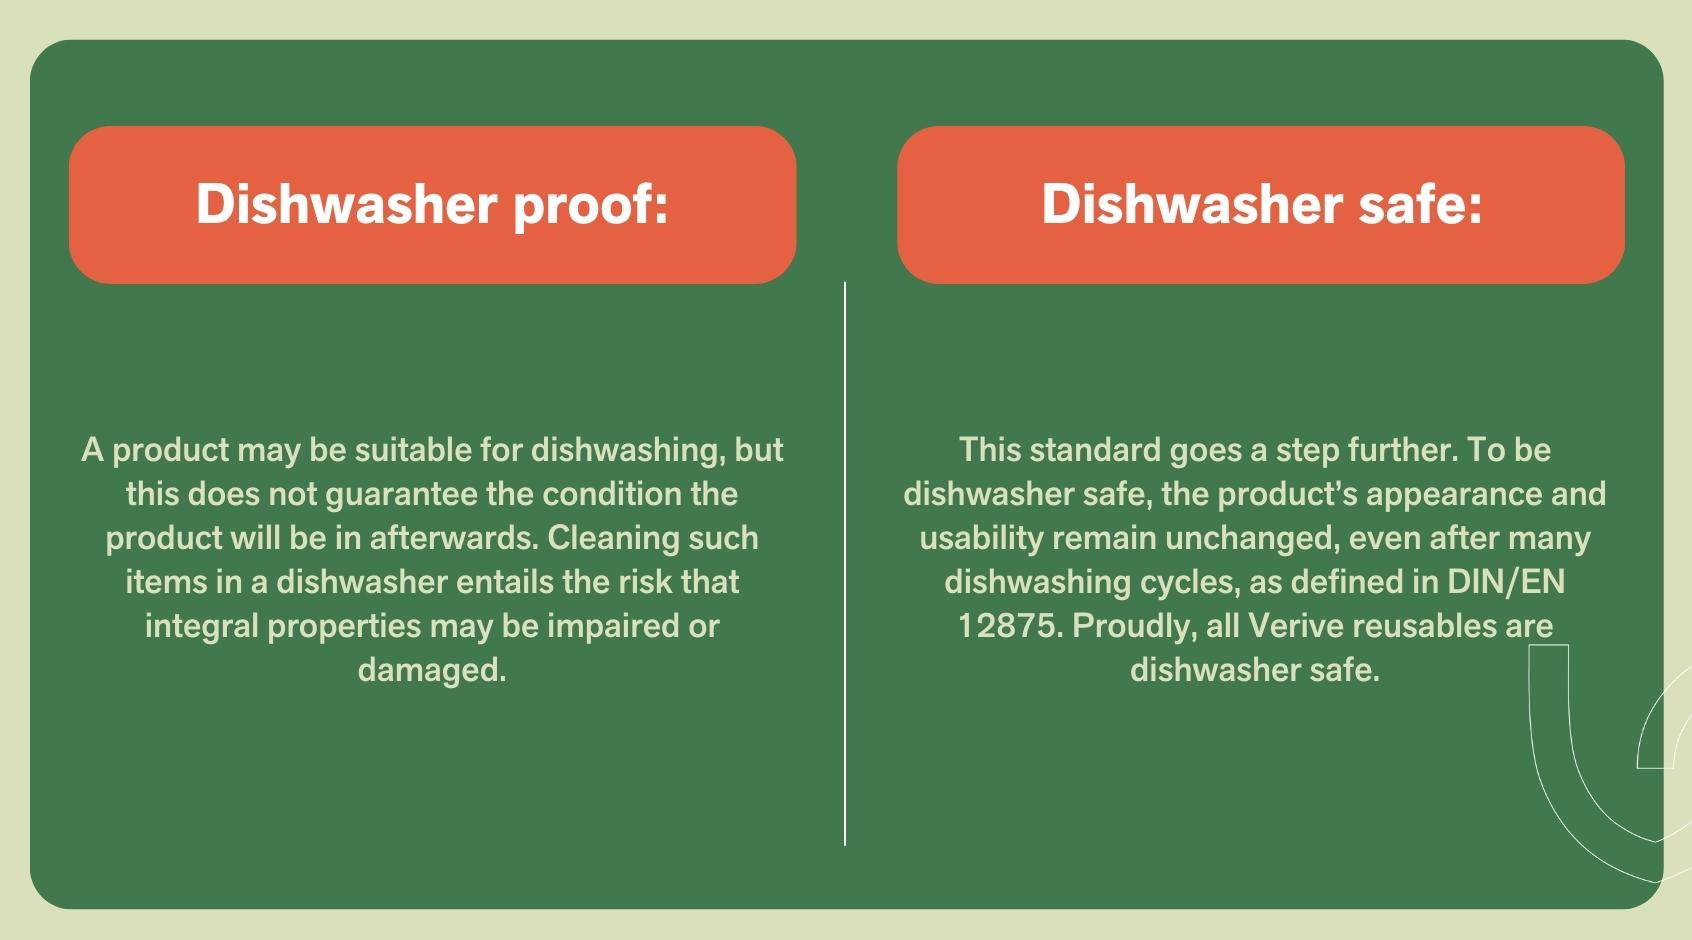 Dishwasher safe vs. dishwasher proof 